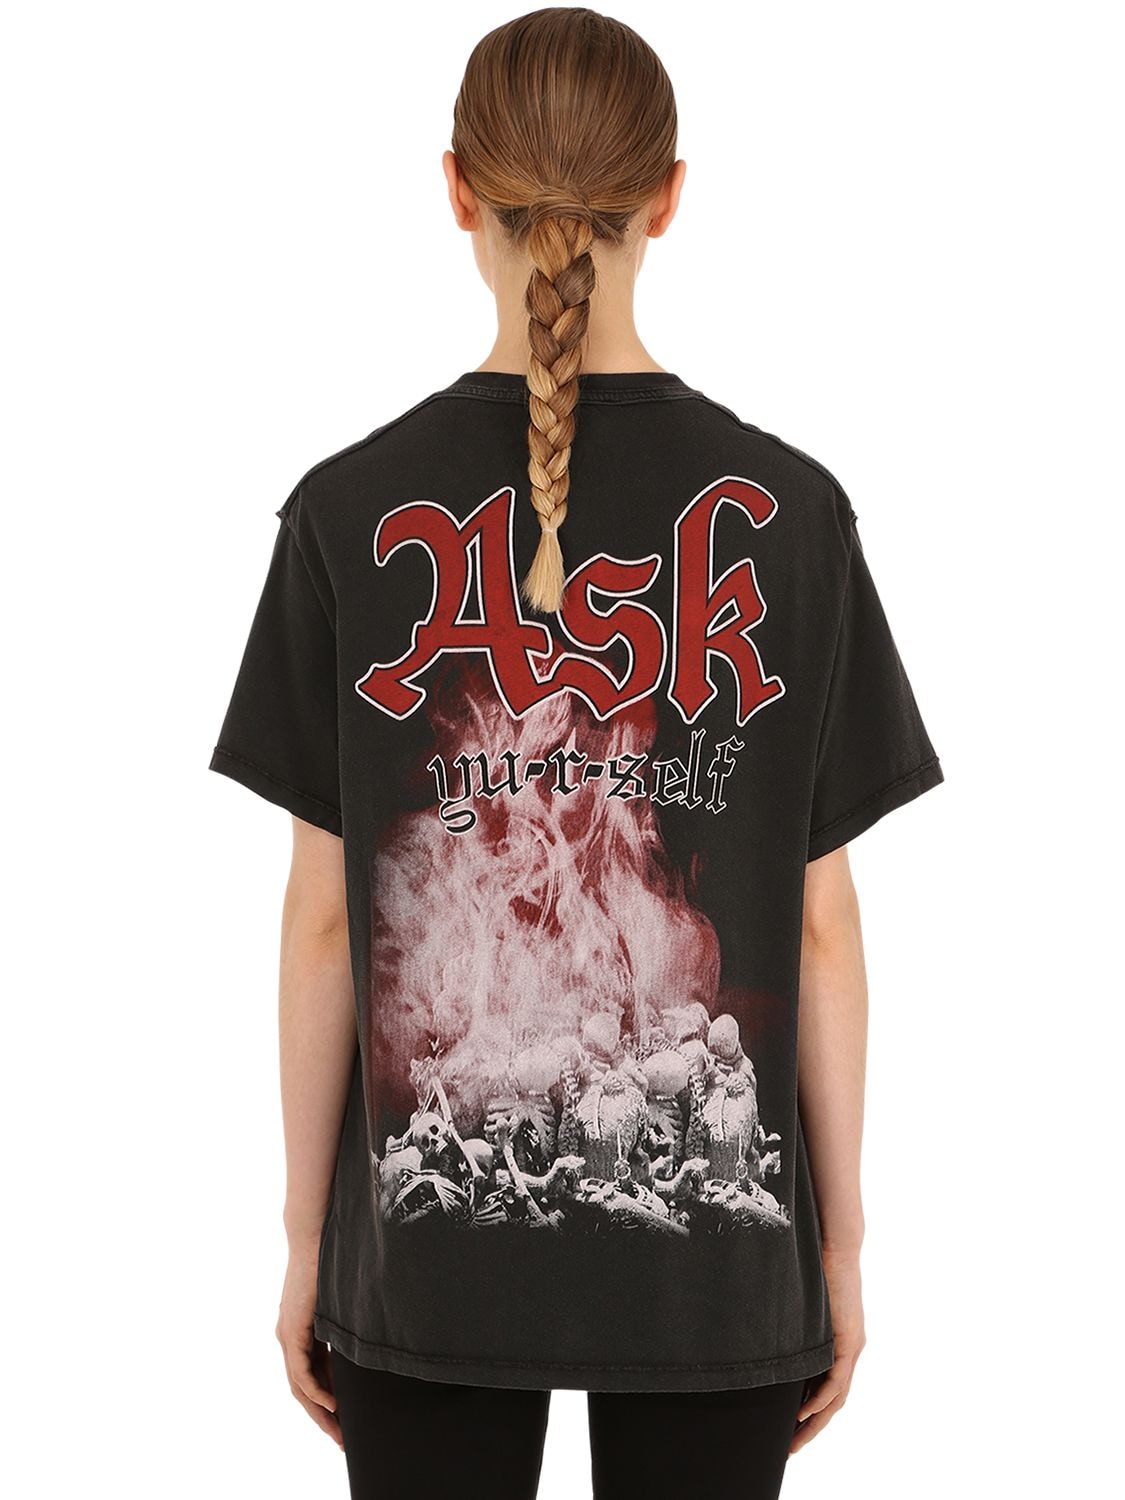 Askyurself Printed Cotton Jersey Rock T-shirt In Black